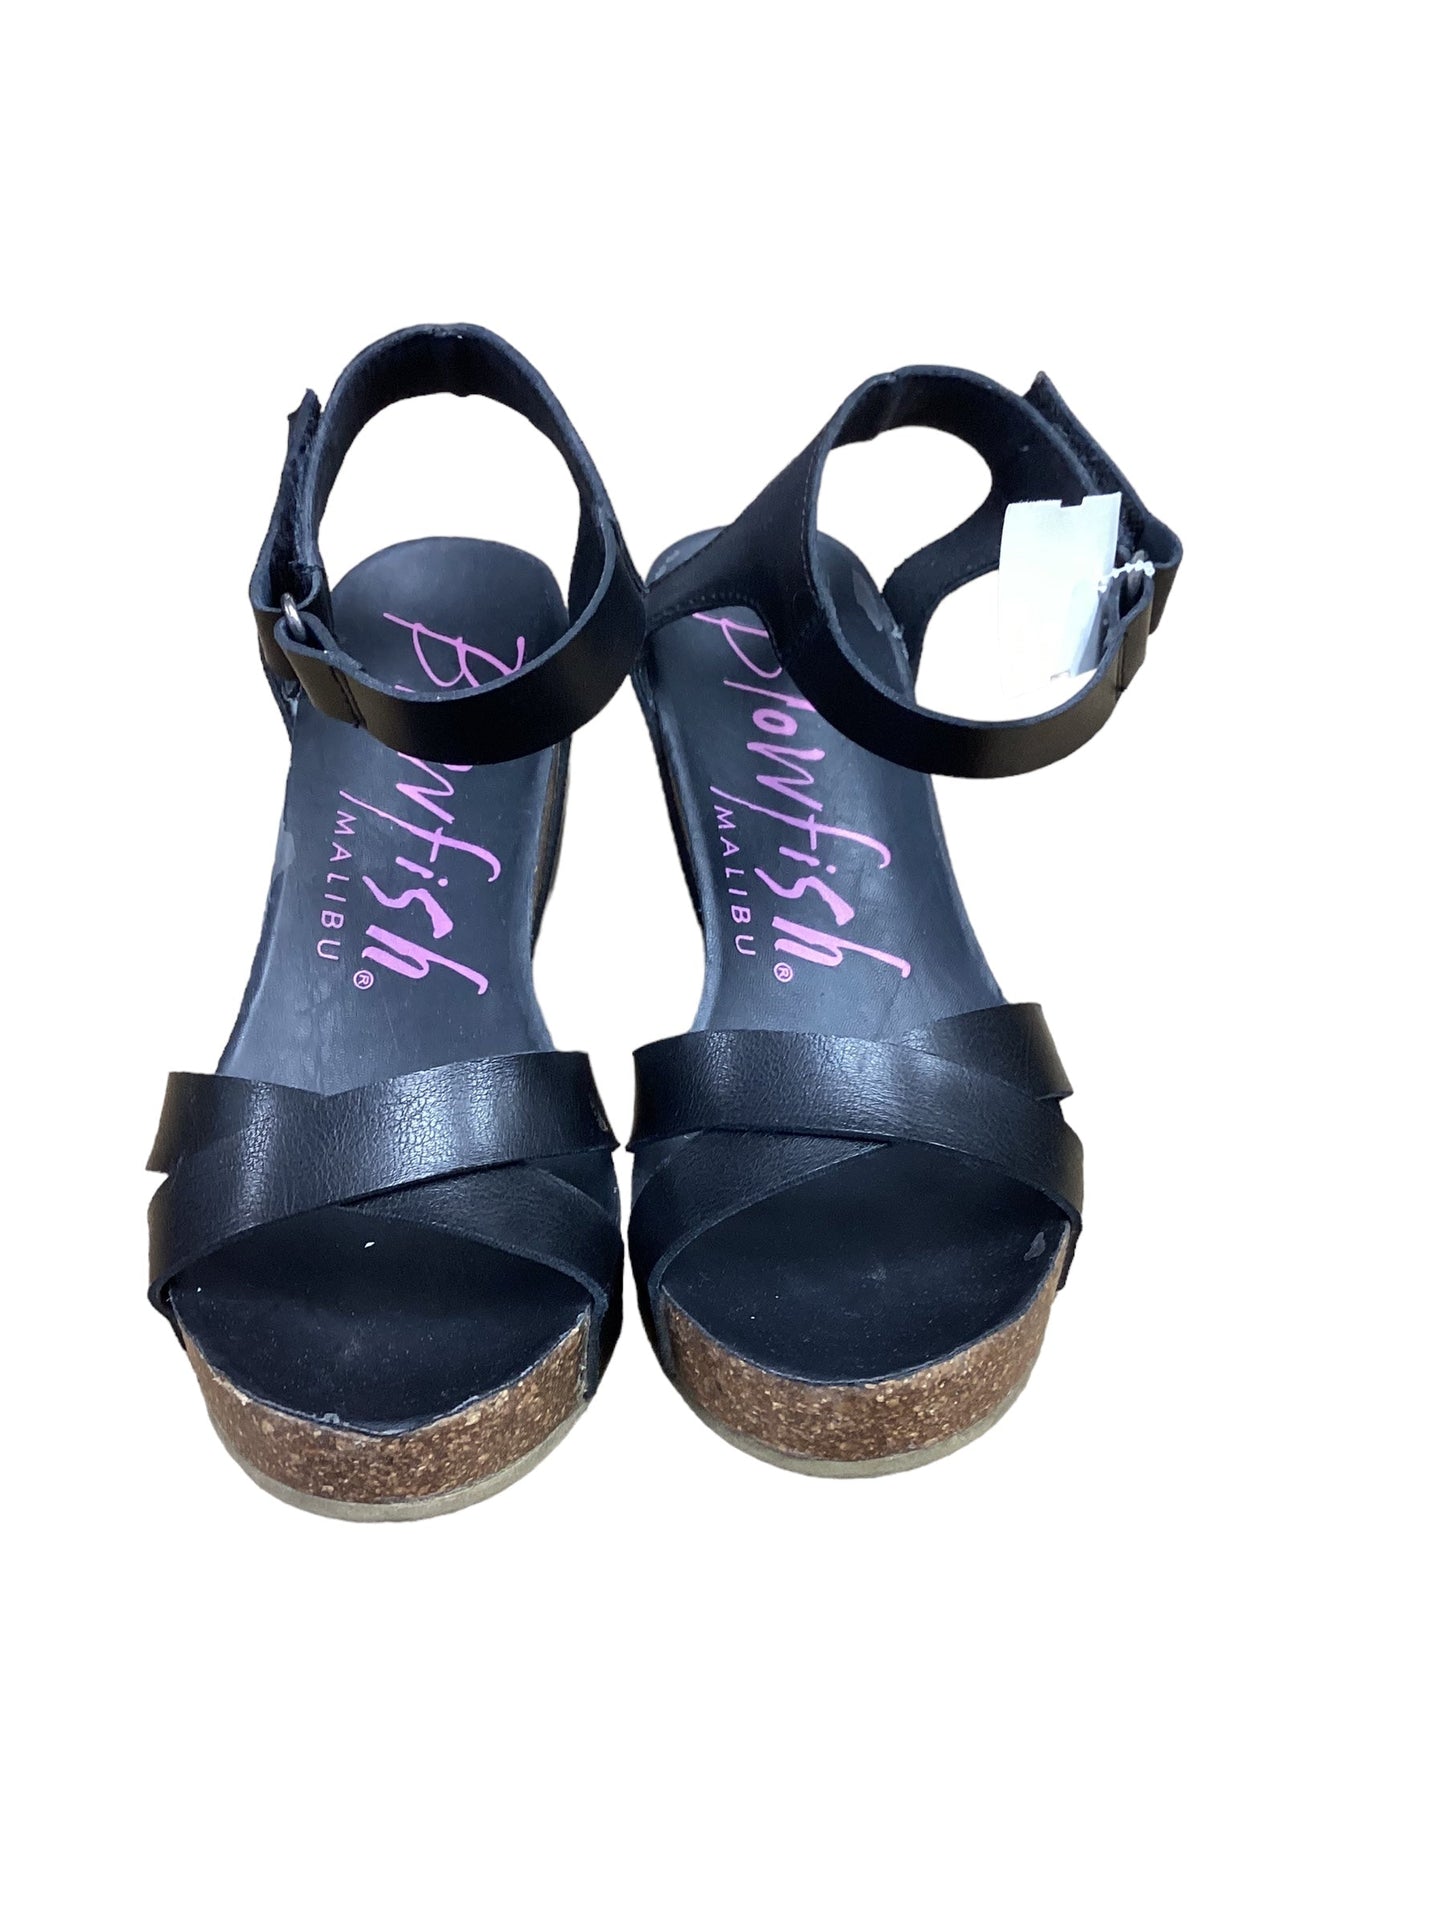 Black Sandals Heels Wedge Blowfish, Size 8